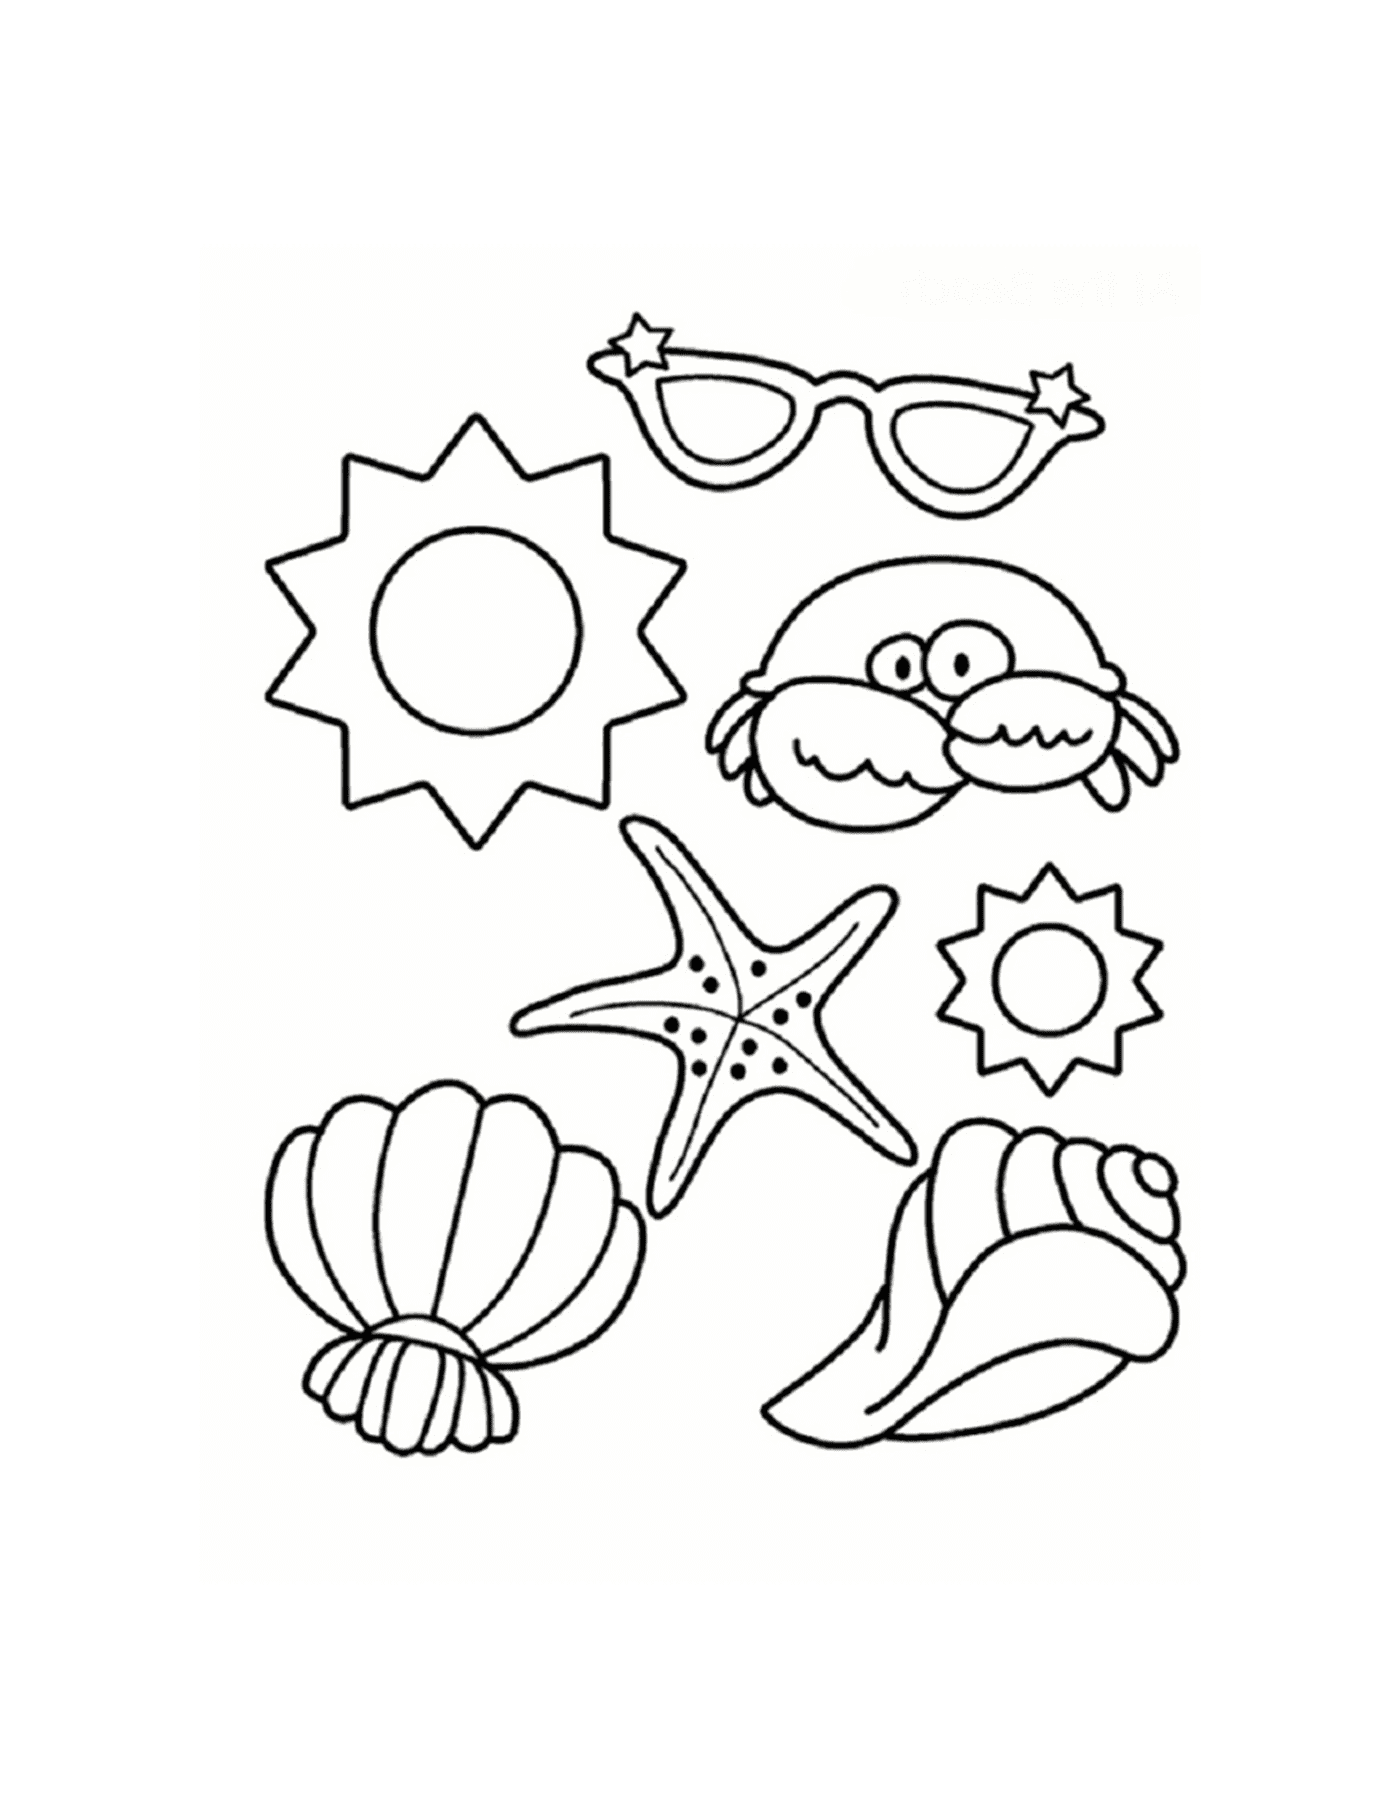  marisco, estrelas do mar, caranguejo e óculos de sol na praia 